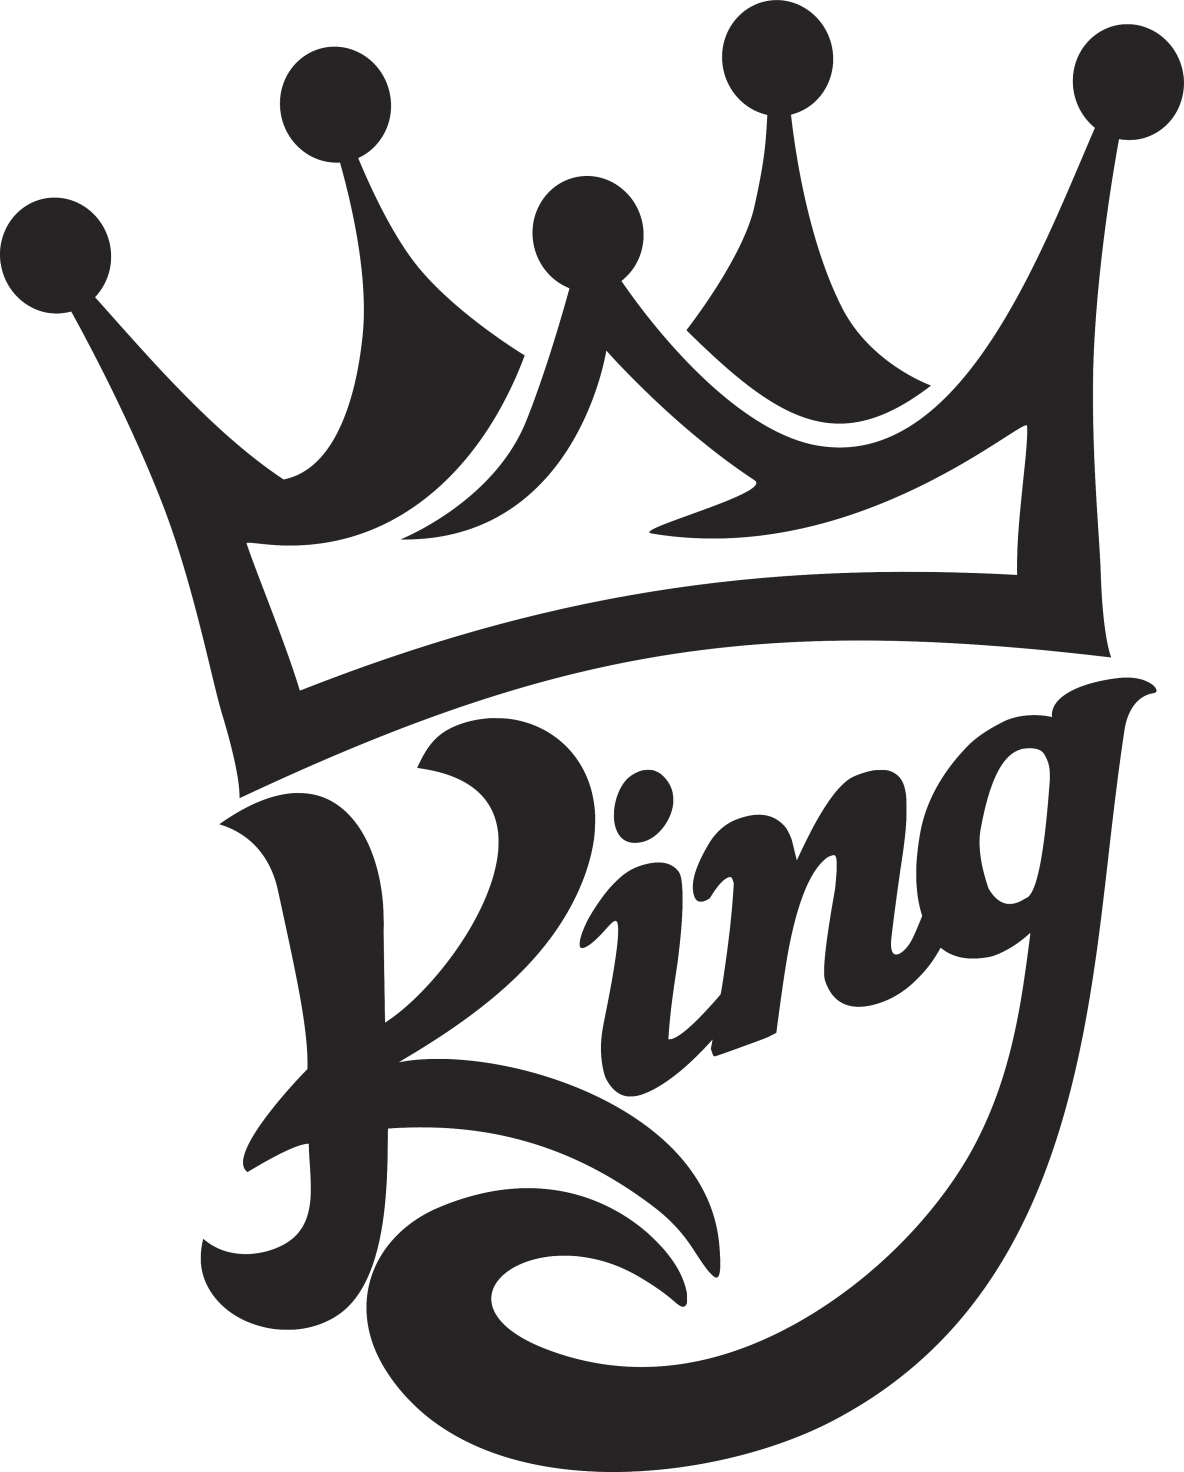 King Crown PNG File